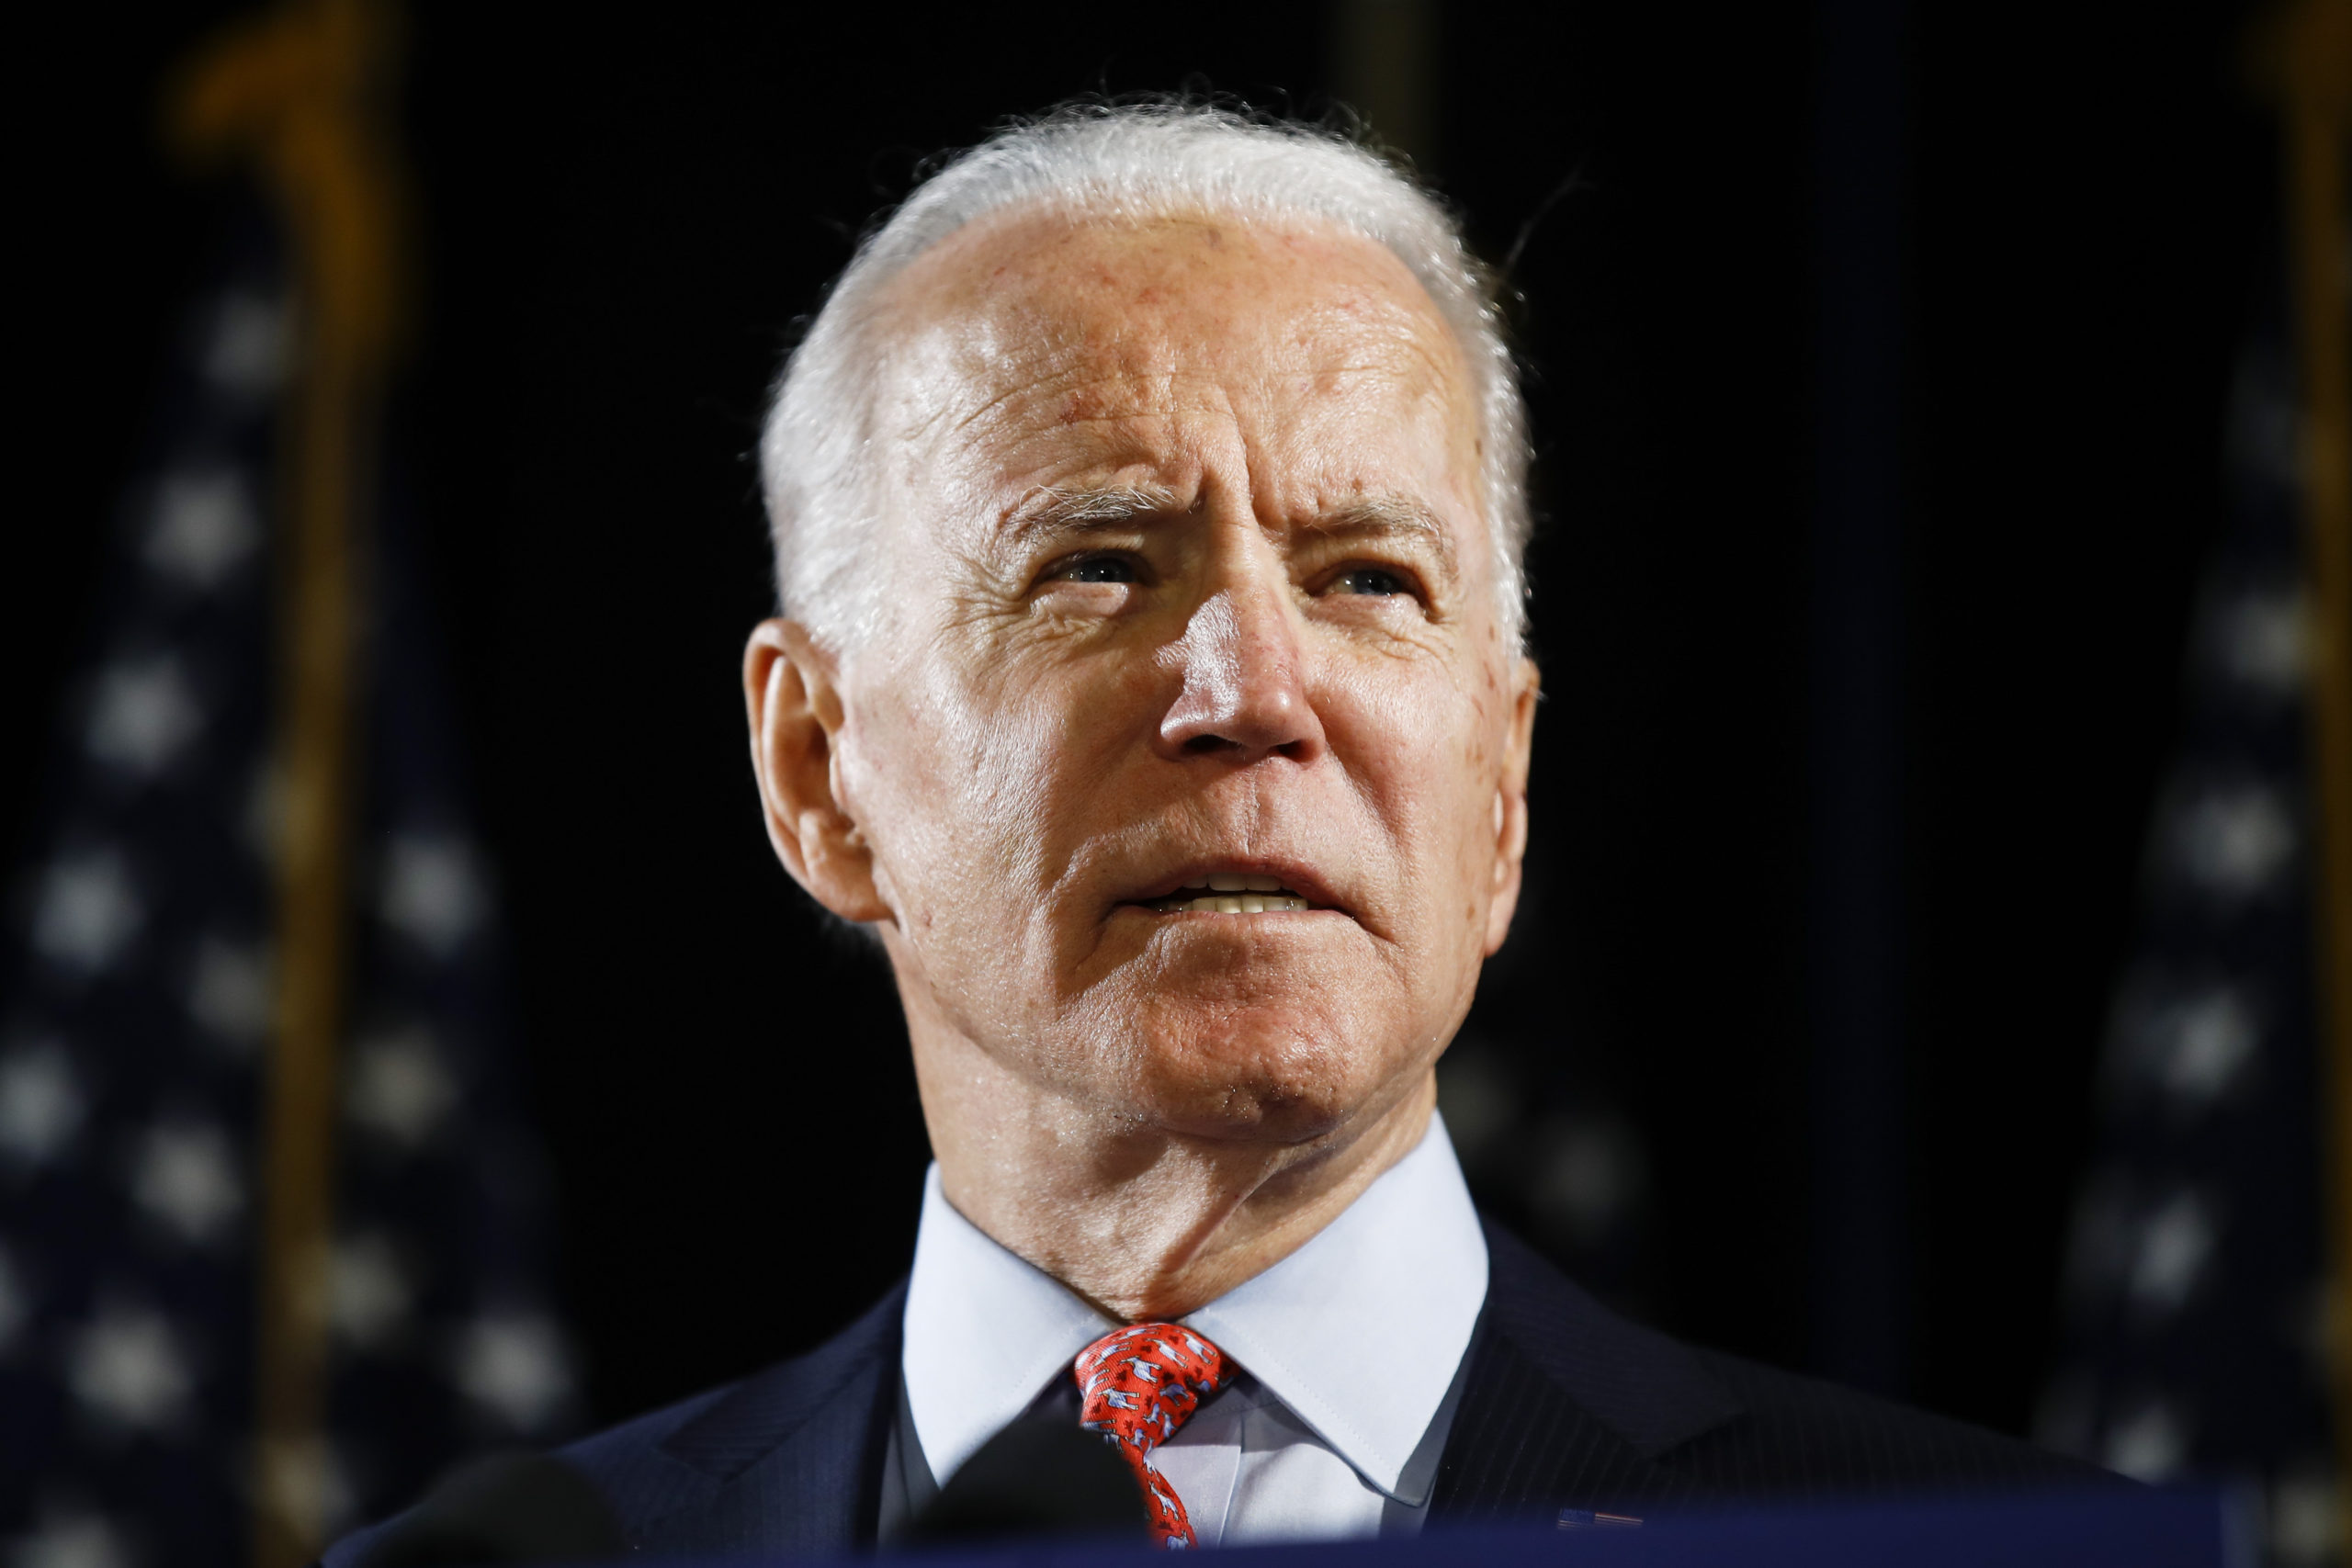 Democratic presidential candidate former Vice President Joe Biden discuses the coronavirus, Thursday, March 12, 2020, in Wilmington, Del. (AP Photo/Matt Rourke)